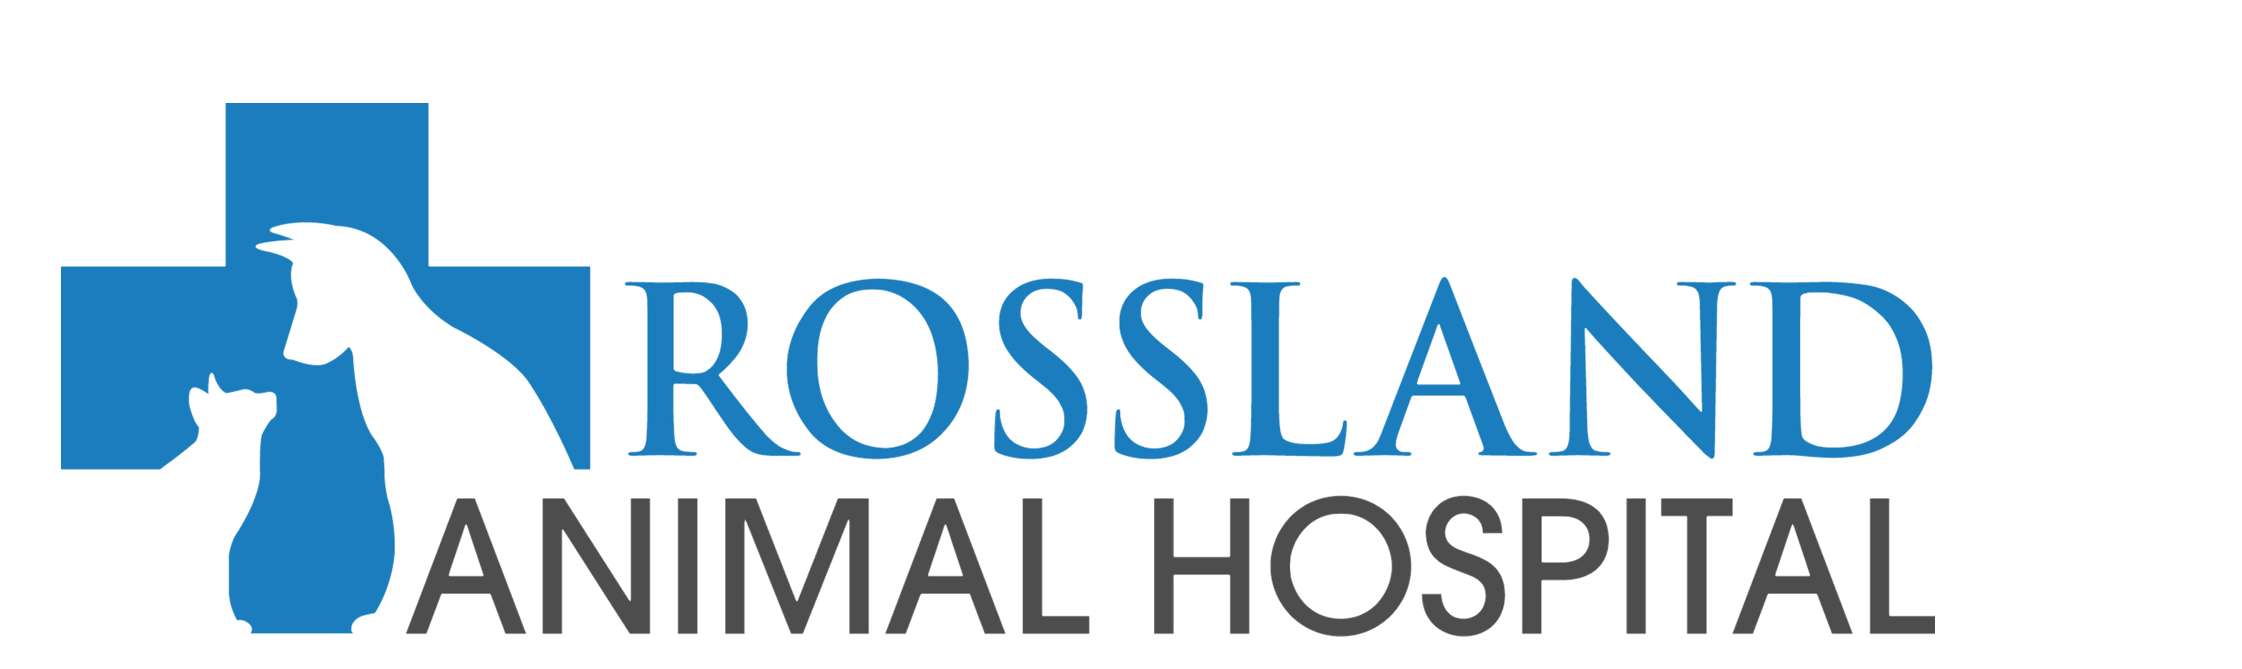 Animal Hospital Logo - Rossland Animal Hospital Oshawa - HOME